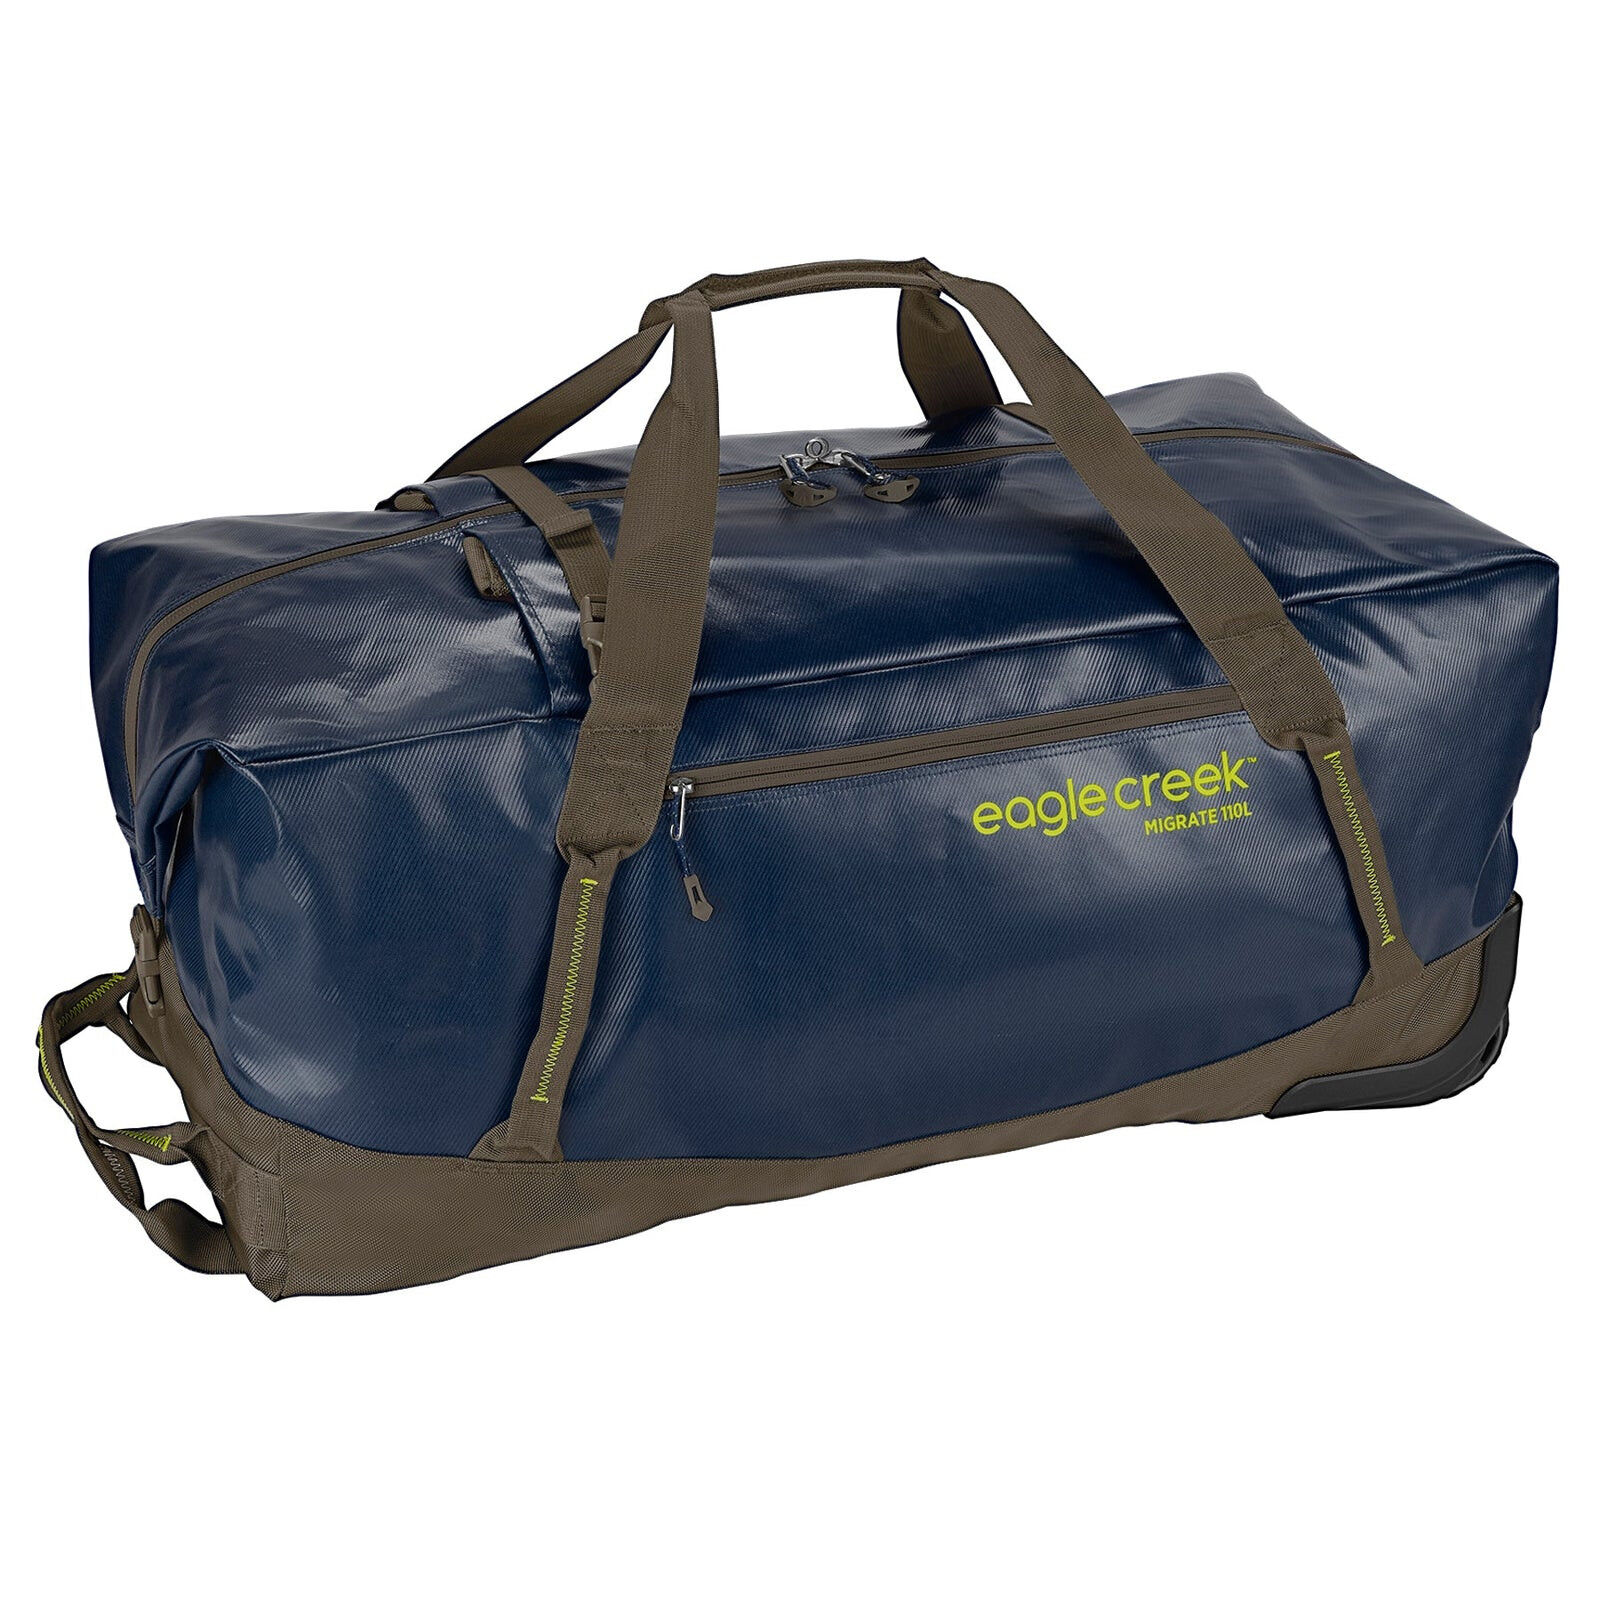 Eagle Creek Migrate Wheeled Duffel 110L - Travel bag